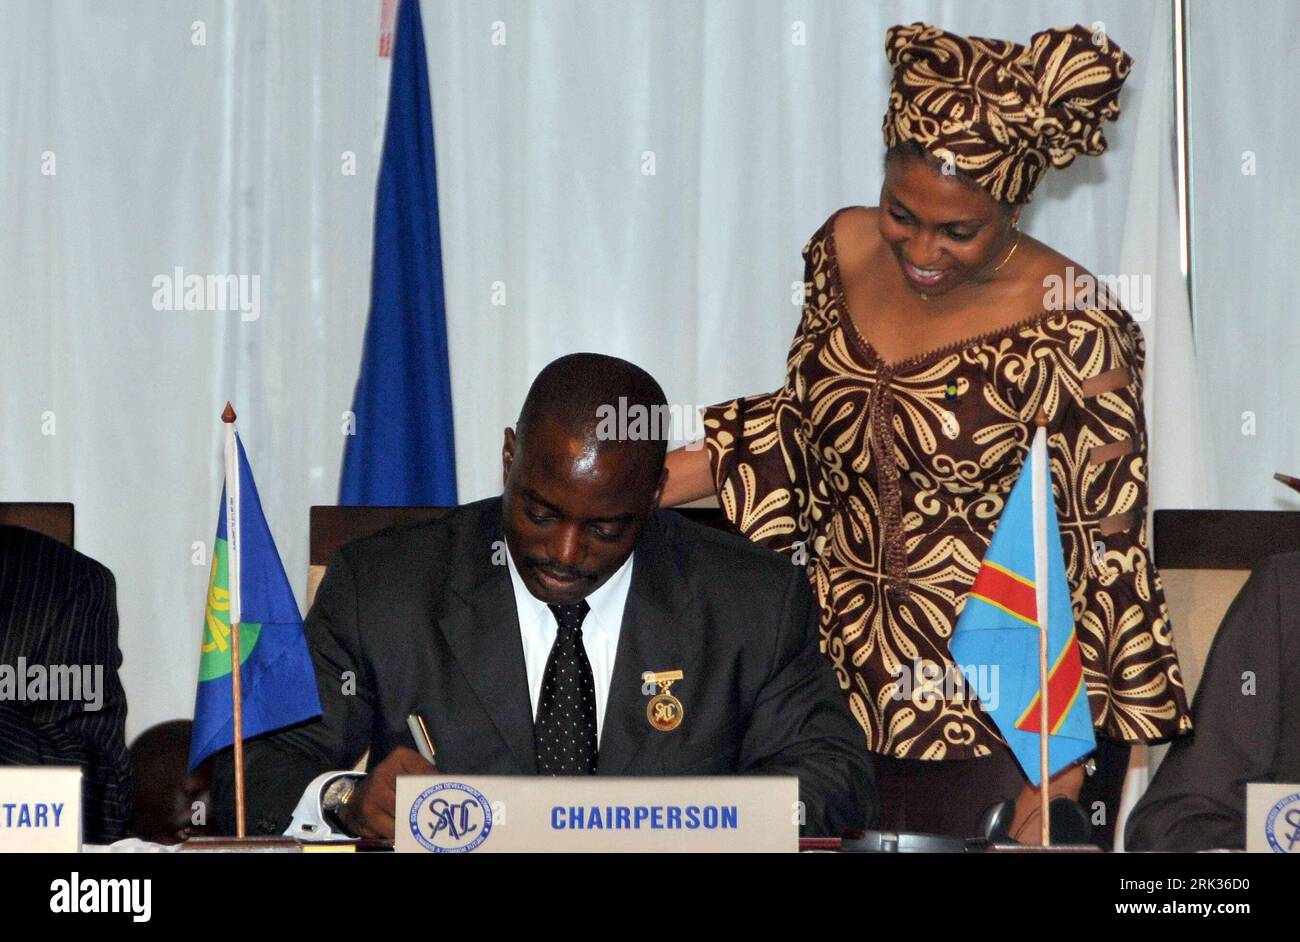 Bildnummer: 53331696  Datum: 08.09.2009  Copyright: imago/Xinhua (090909) -- KINSHASA, Sept. 9, 2009 (Xinhua) -- Southern African Development Community (SADC) chairperson, President of the Democratic Republic of Congo (DRC) Joseph Kabila signs a jonit annoucement during the SADC summit in Kinshasa, capital of the DRC, Sept. 8, 2009. The 29th SADC summit was closed on Tuesday. (Xinhua/Shu Shi) (zcq) (1)DRC-KINSHASA-SADC SUMMIT PUBLICATIONxNOTxINxCHN Kinshasa People Politik Gipfelkonferenz Konferenz Südafrikanische Entwicklungsgemeinschaft kbdig xub 2009 quer premiumd    Bildnummer 53331696 Date Stock Photo